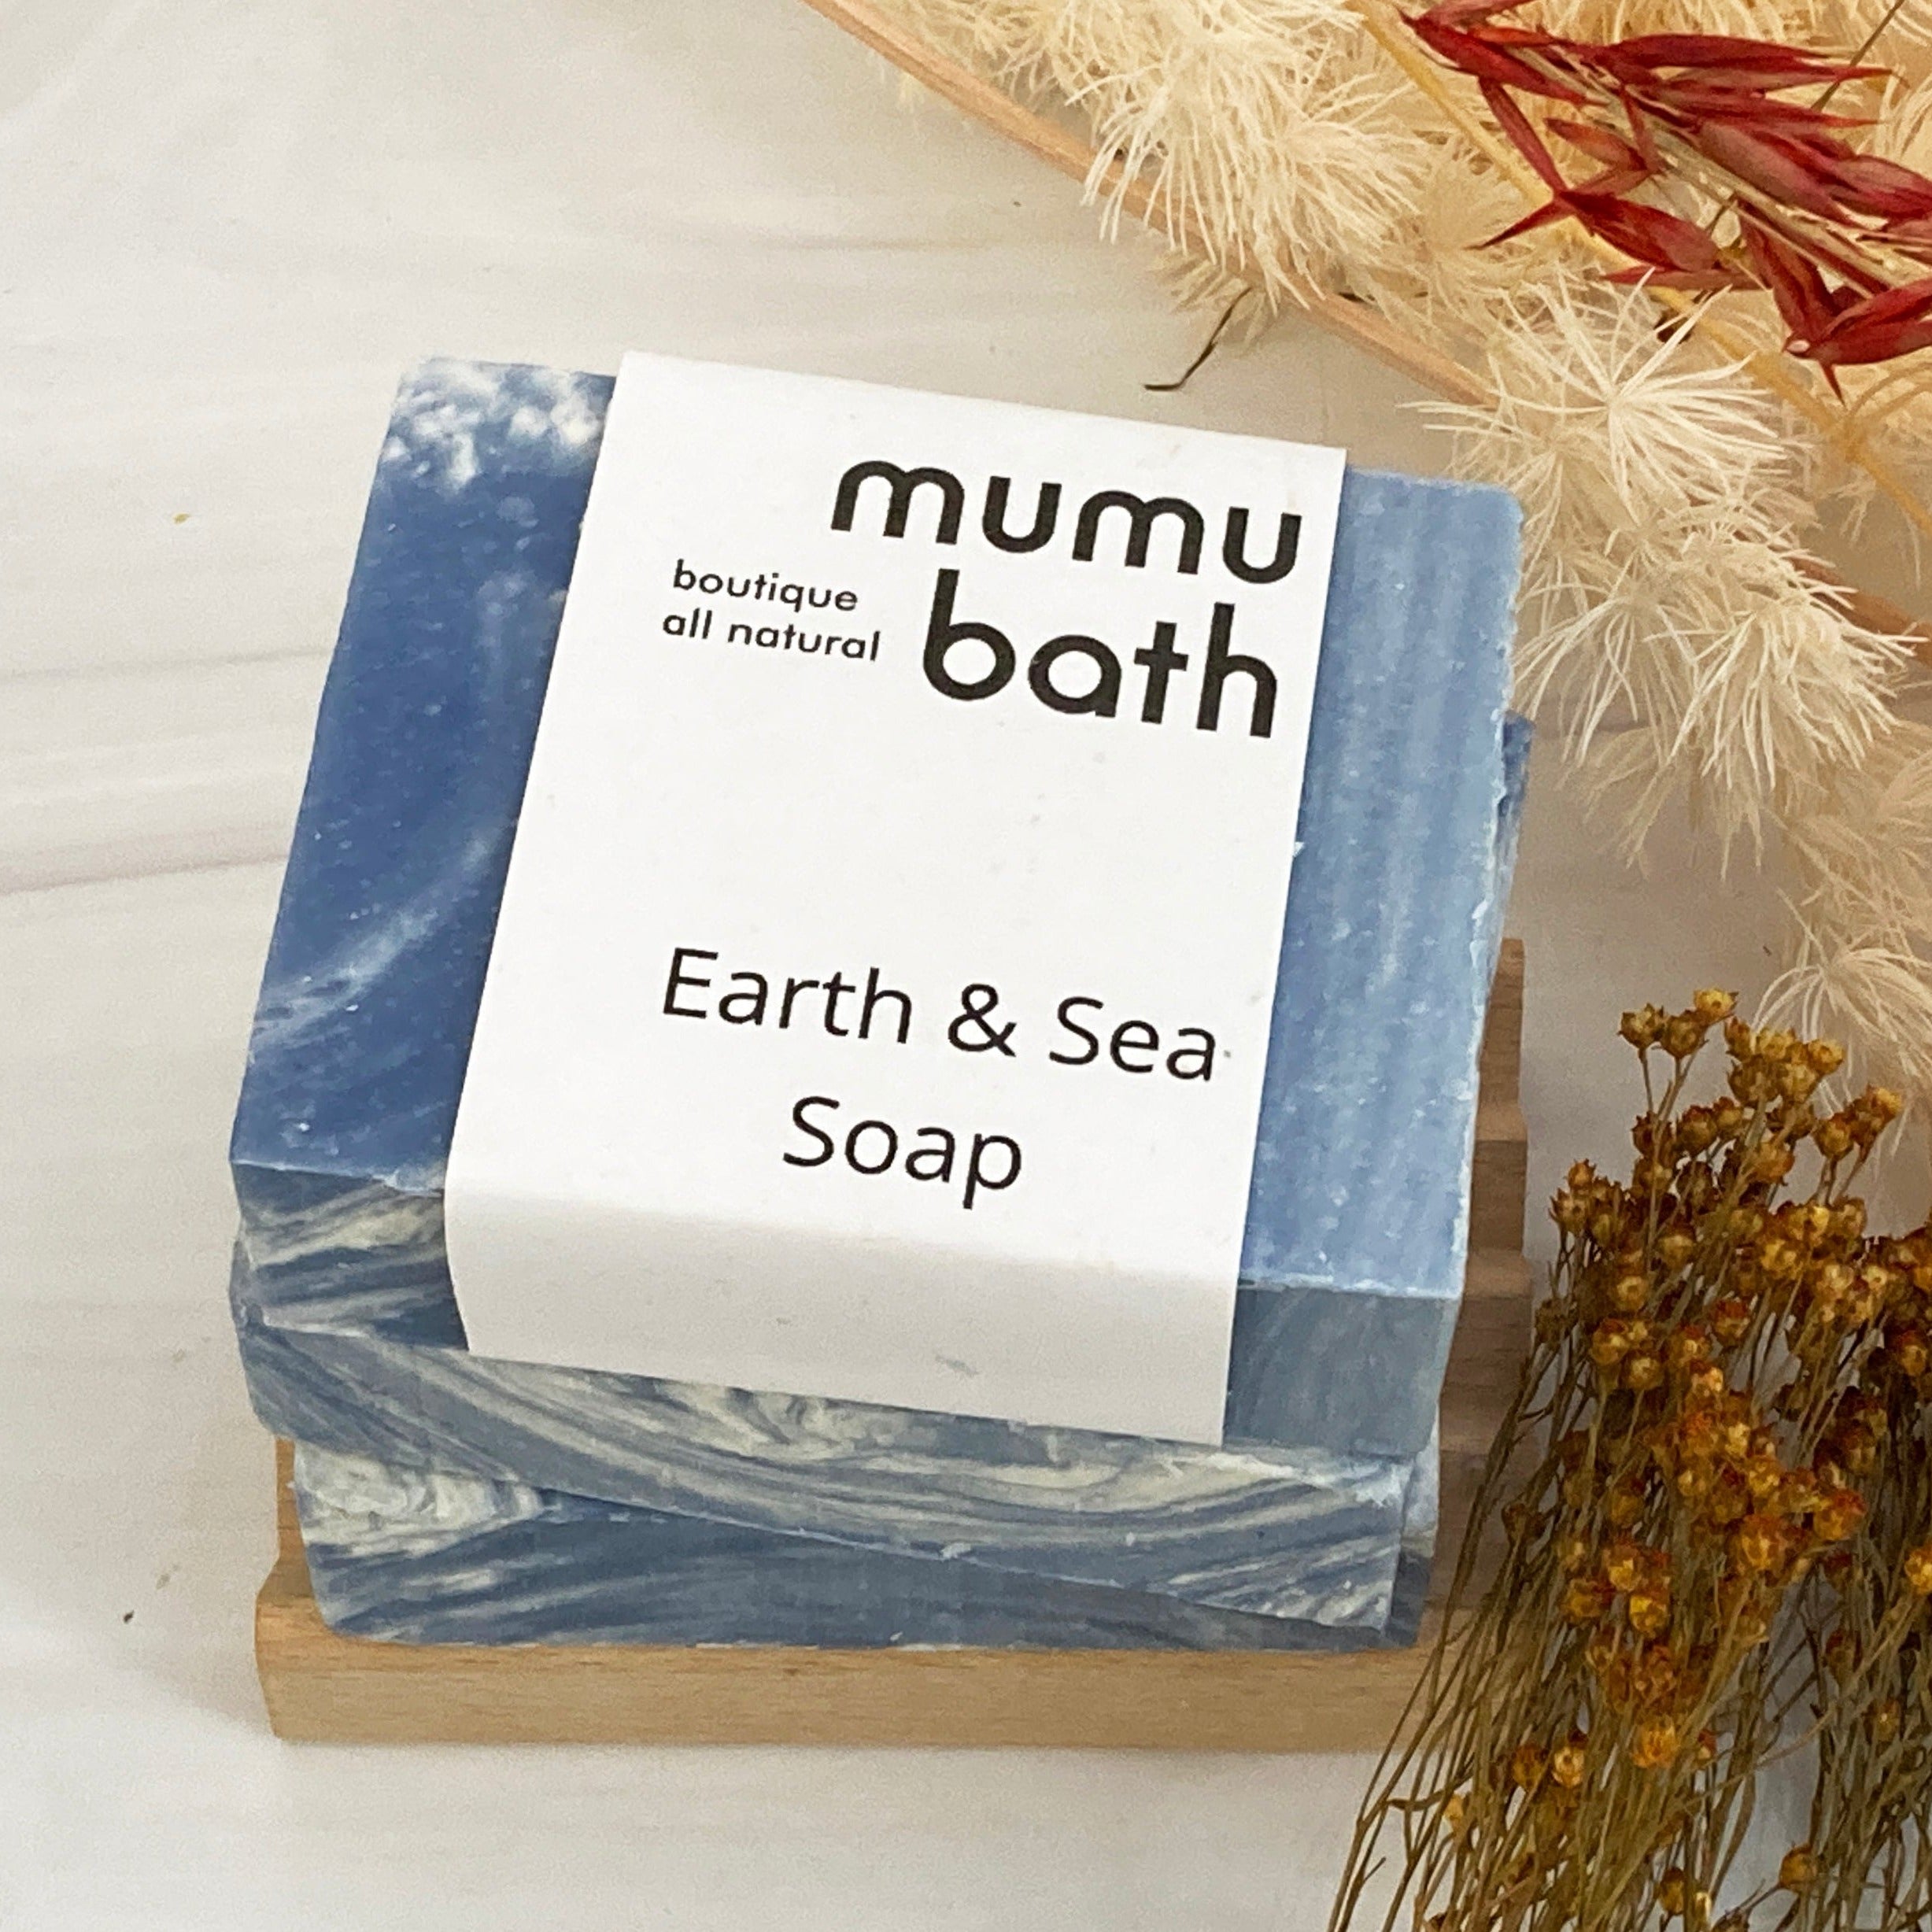 Earth & Sea Soap - Mumu Bath